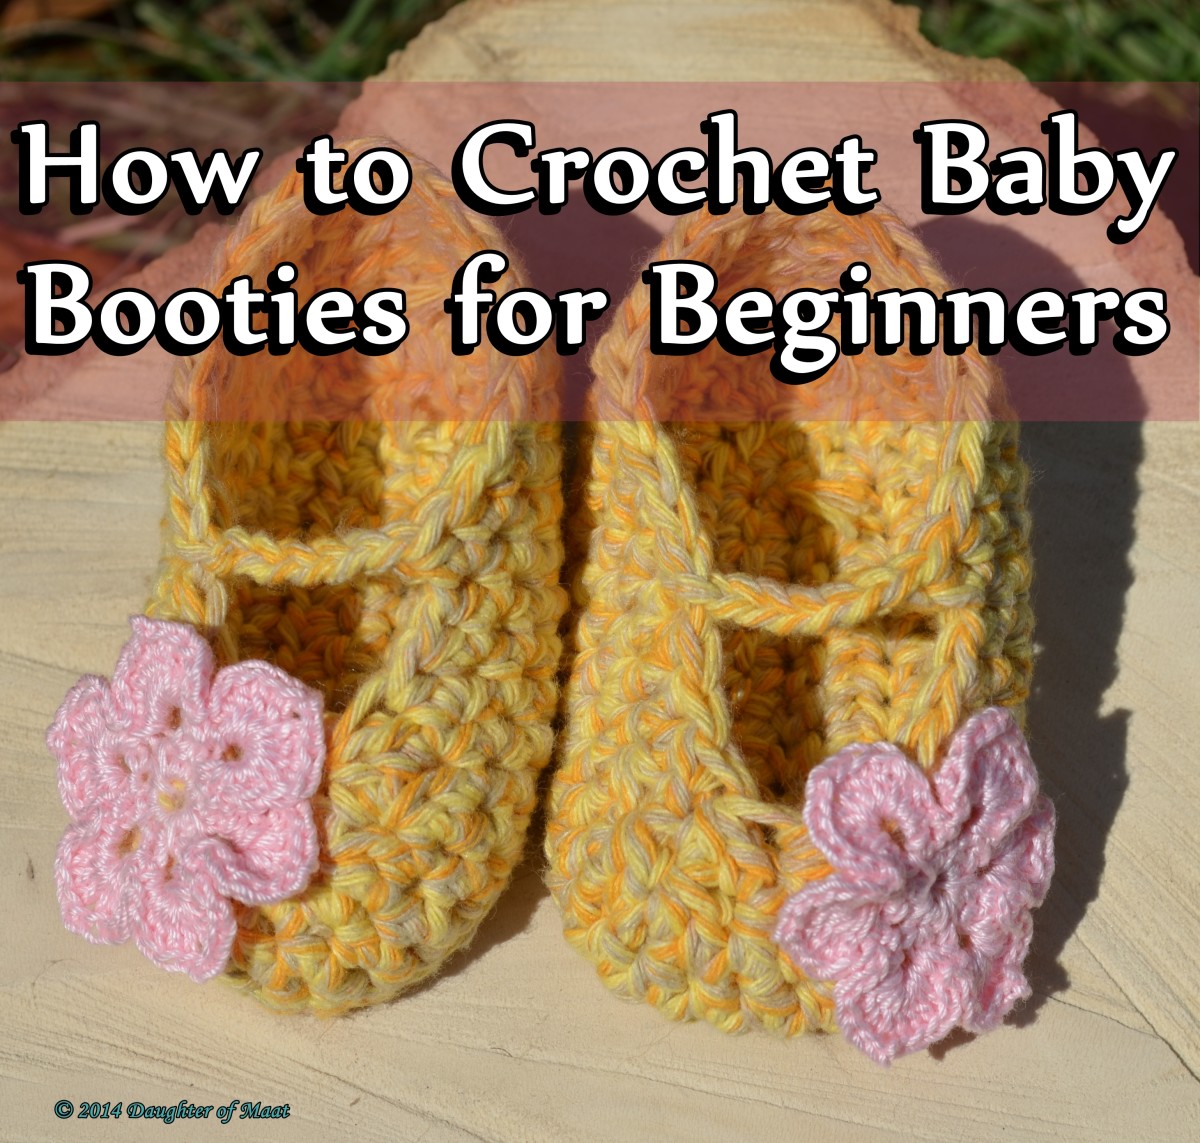 How to Crochet Baby Booties for Beginners